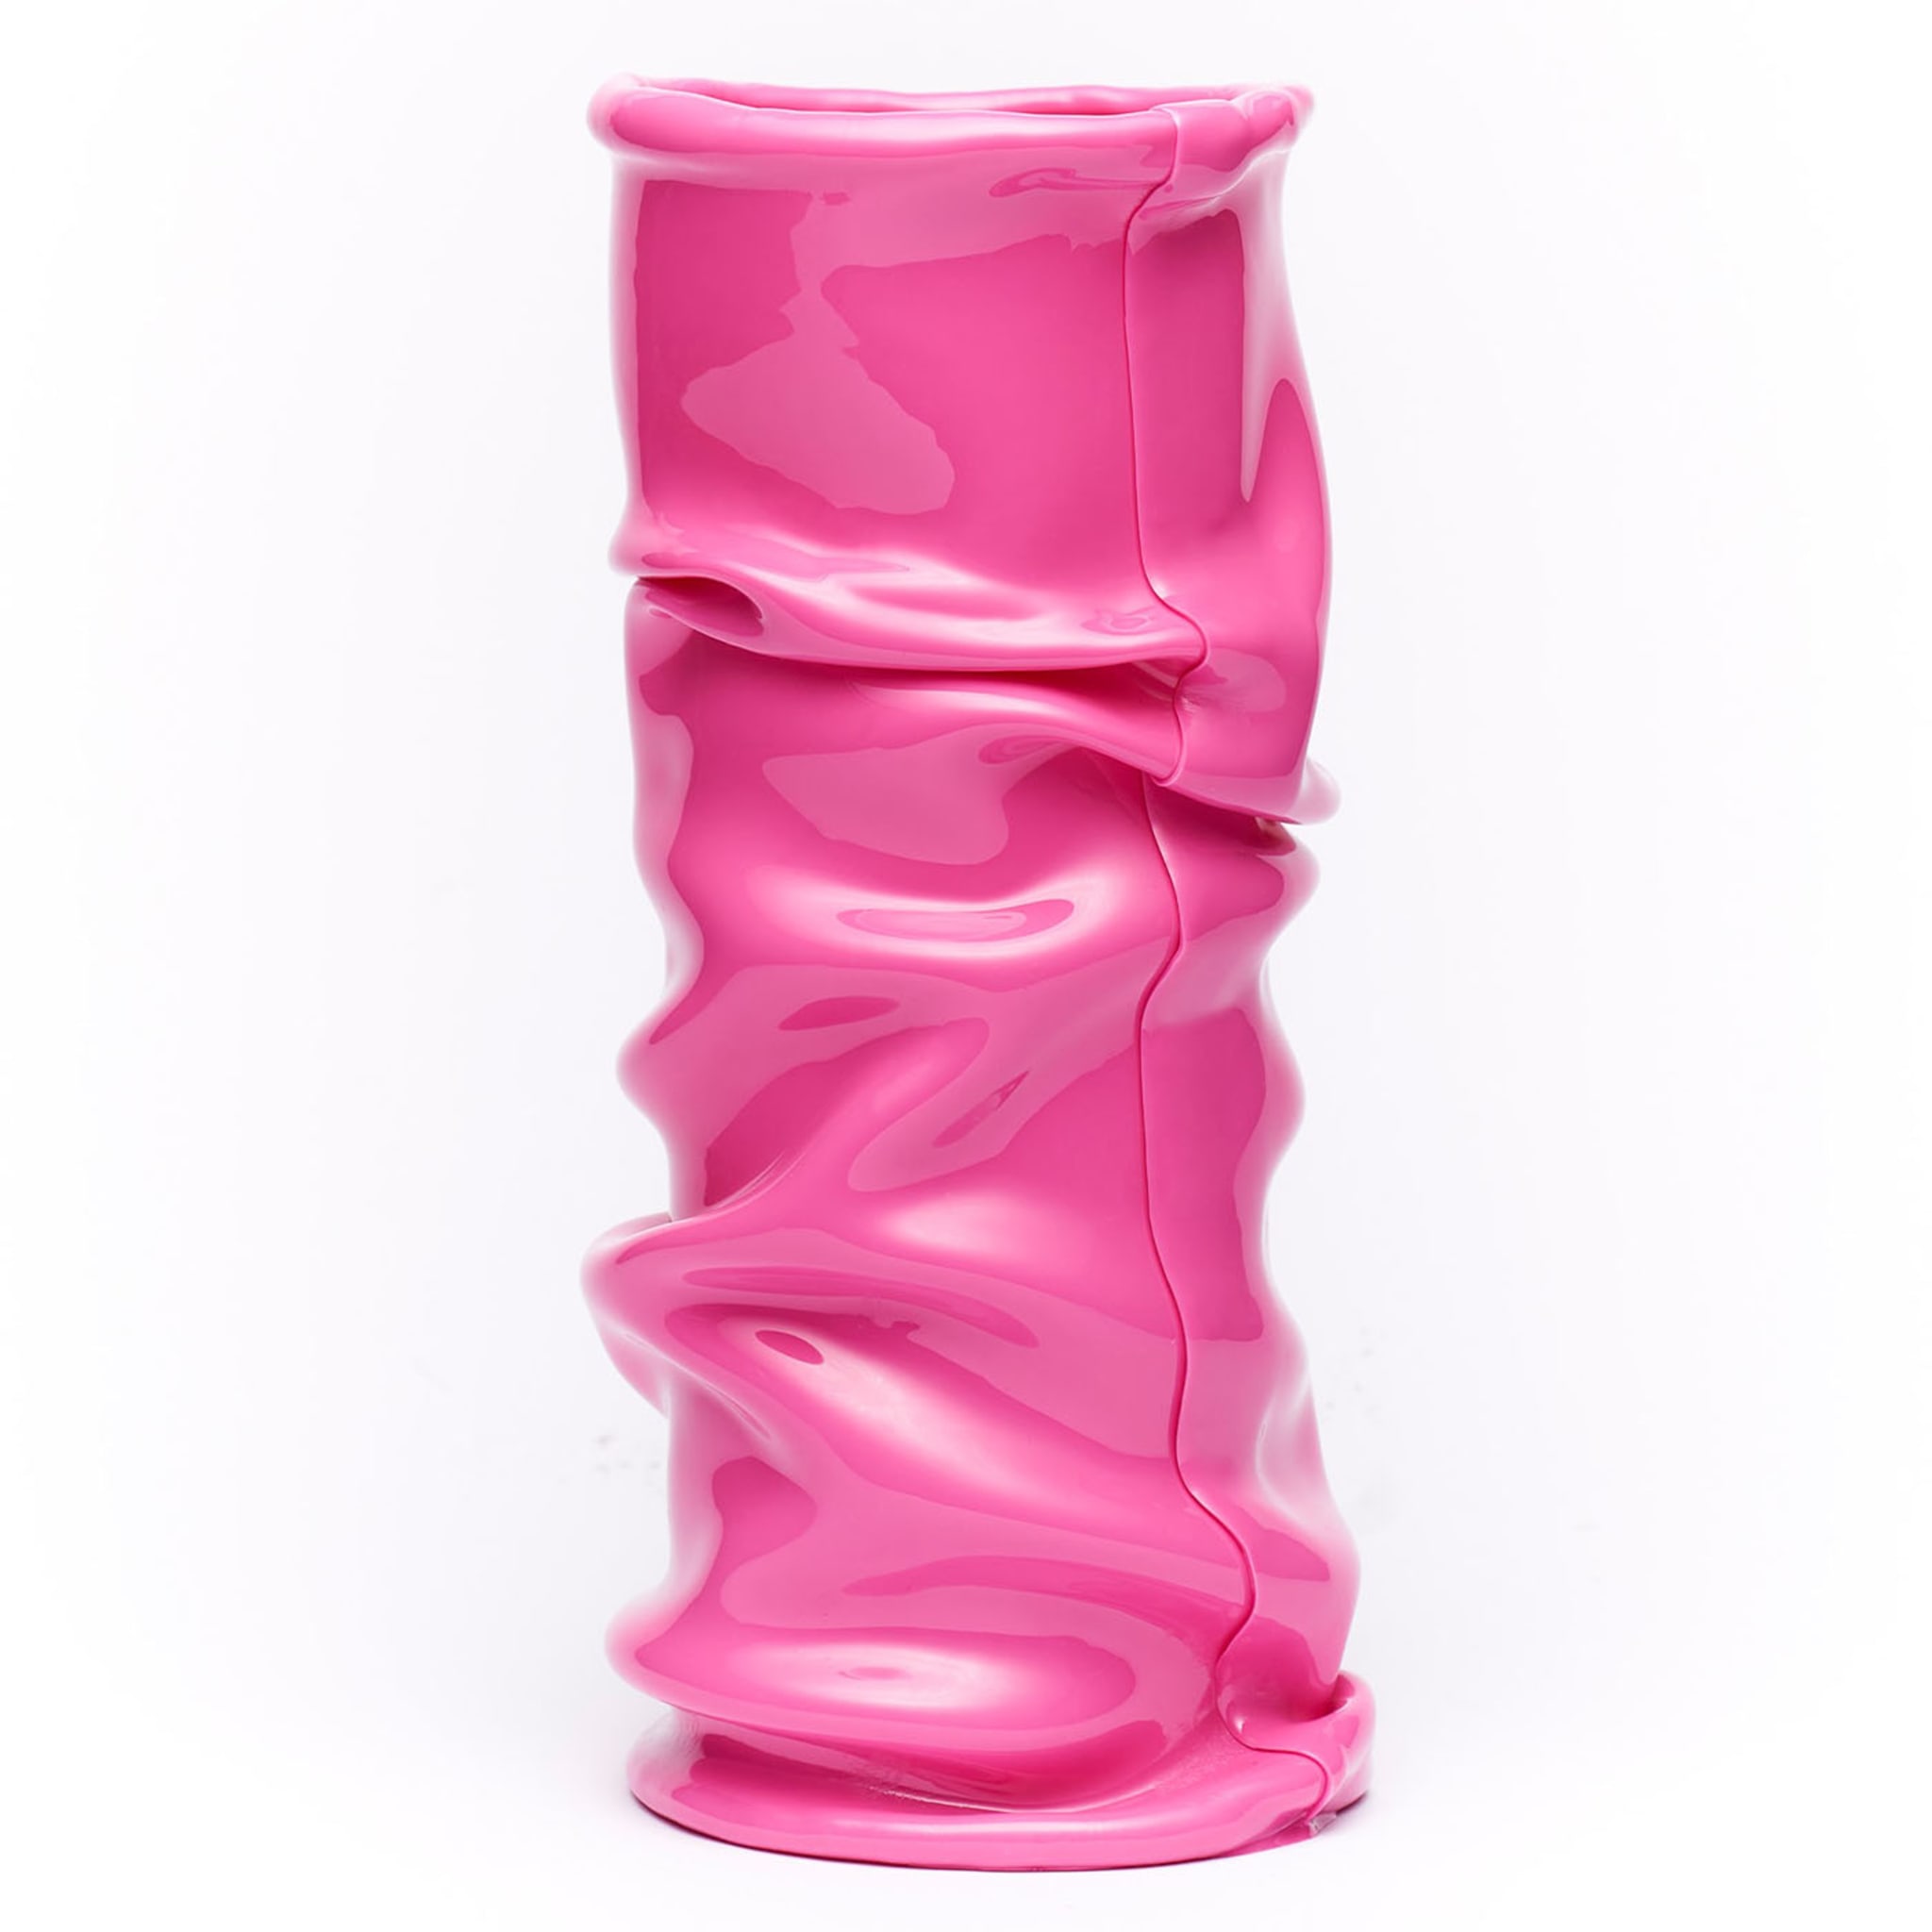 Venere Small Pink Vase - Alternative view 1